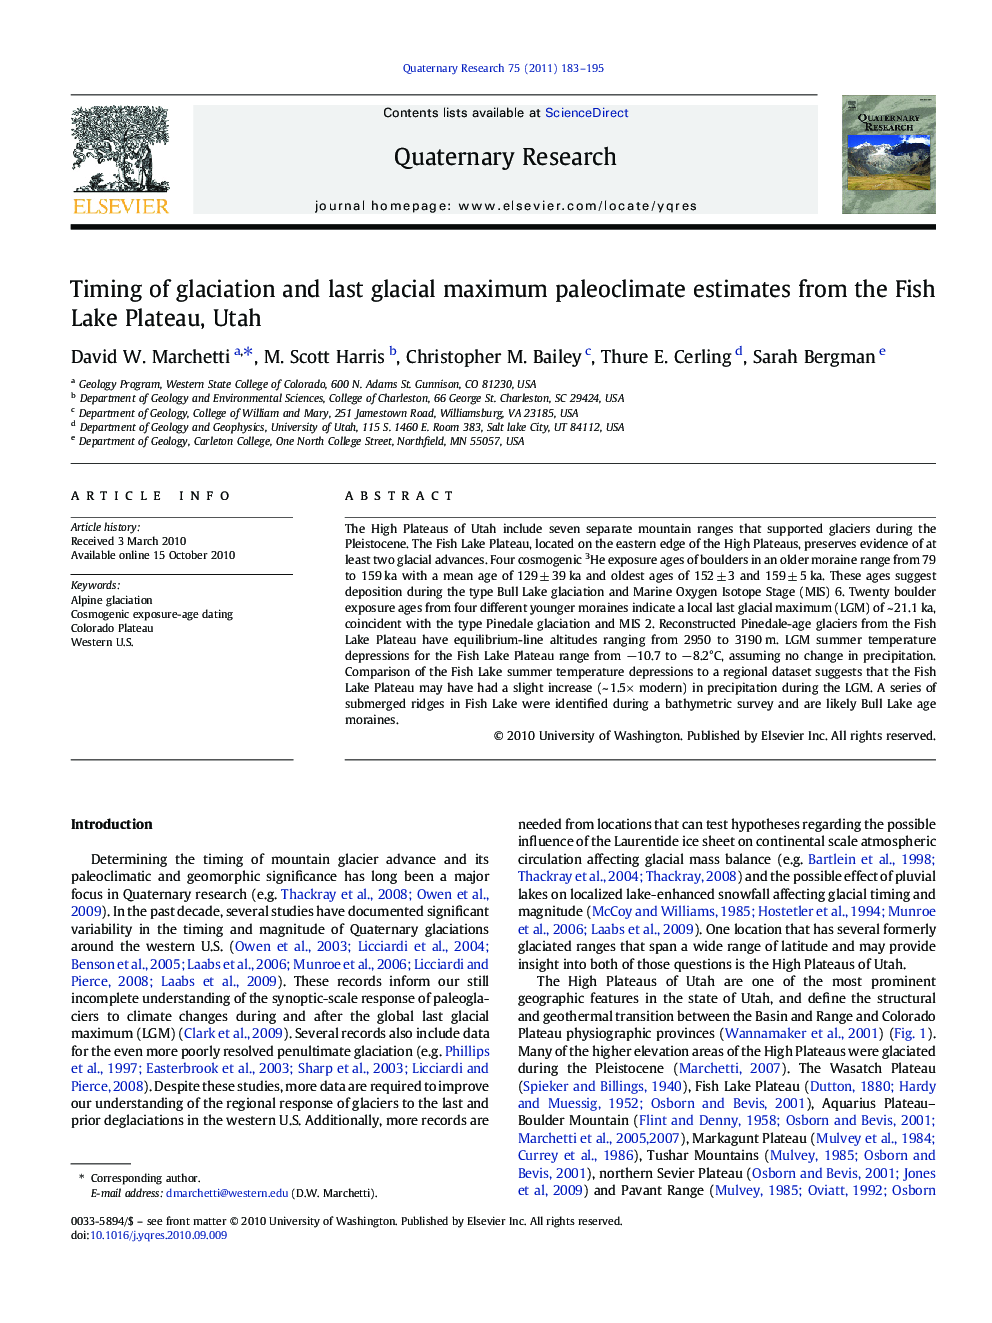 Timing of glaciation and last glacial maximum paleoclimate estimates from the Fish Lake Plateau, Utah